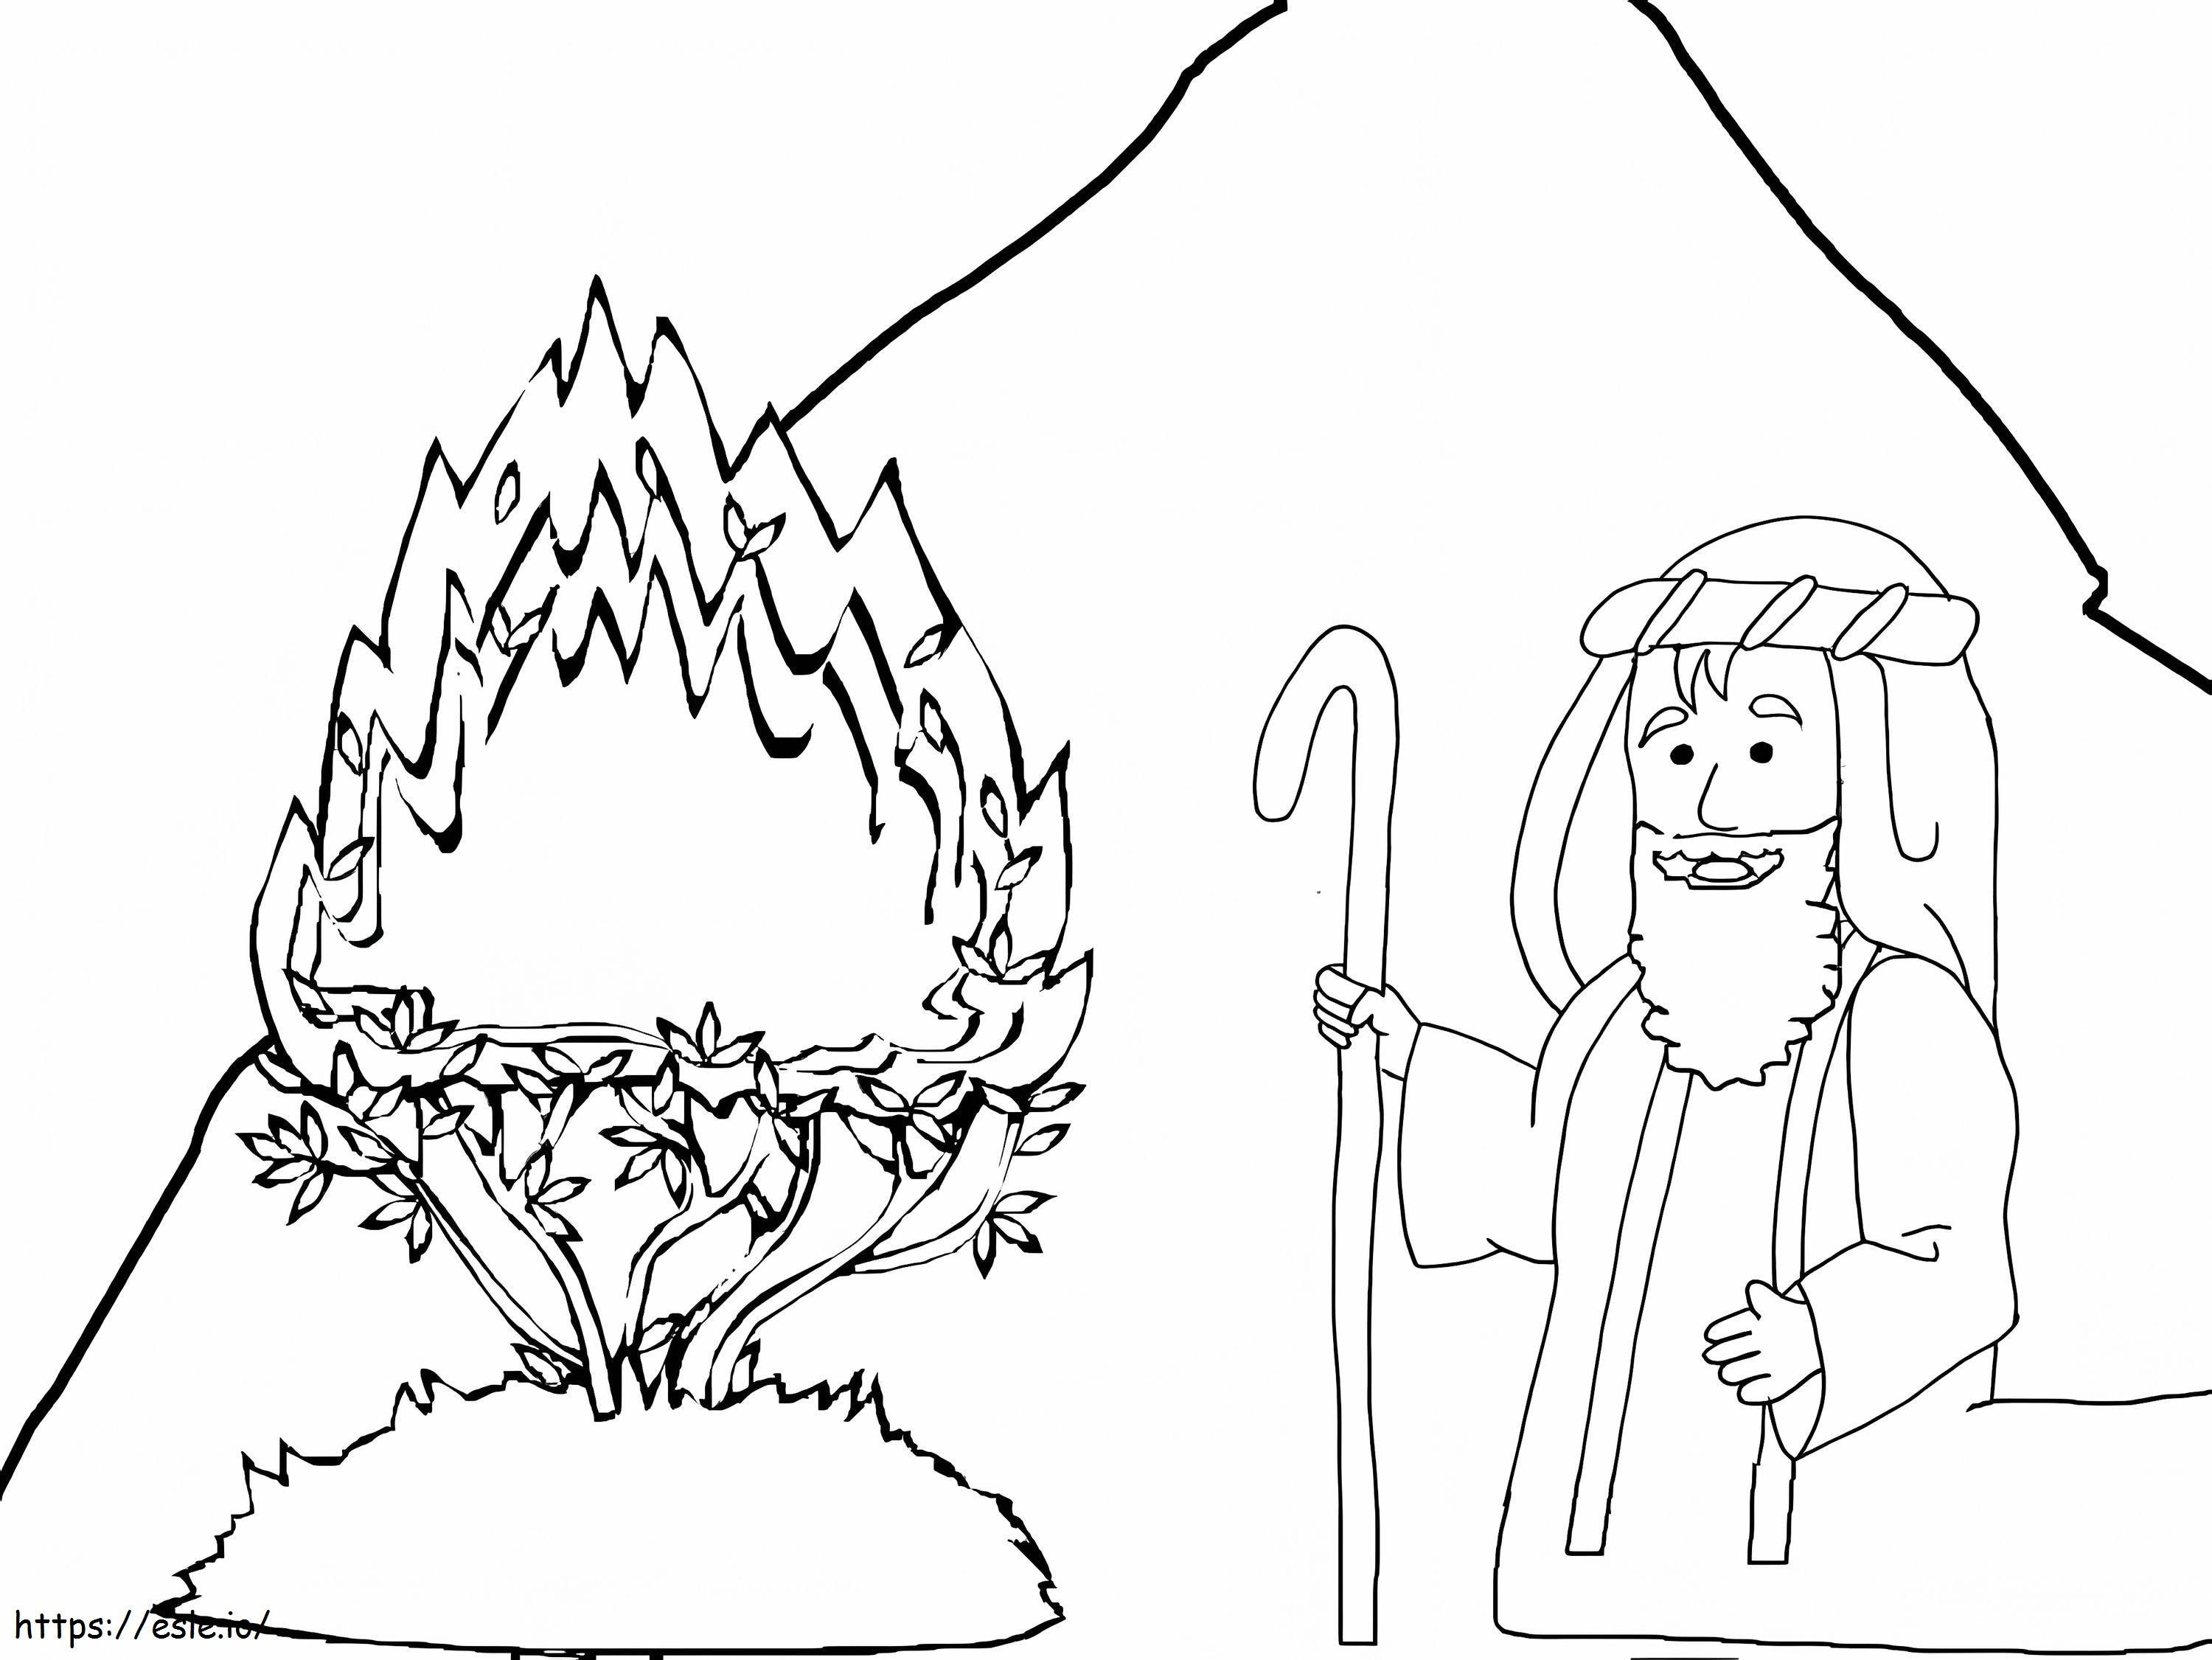 Burning Bush 2 coloring page